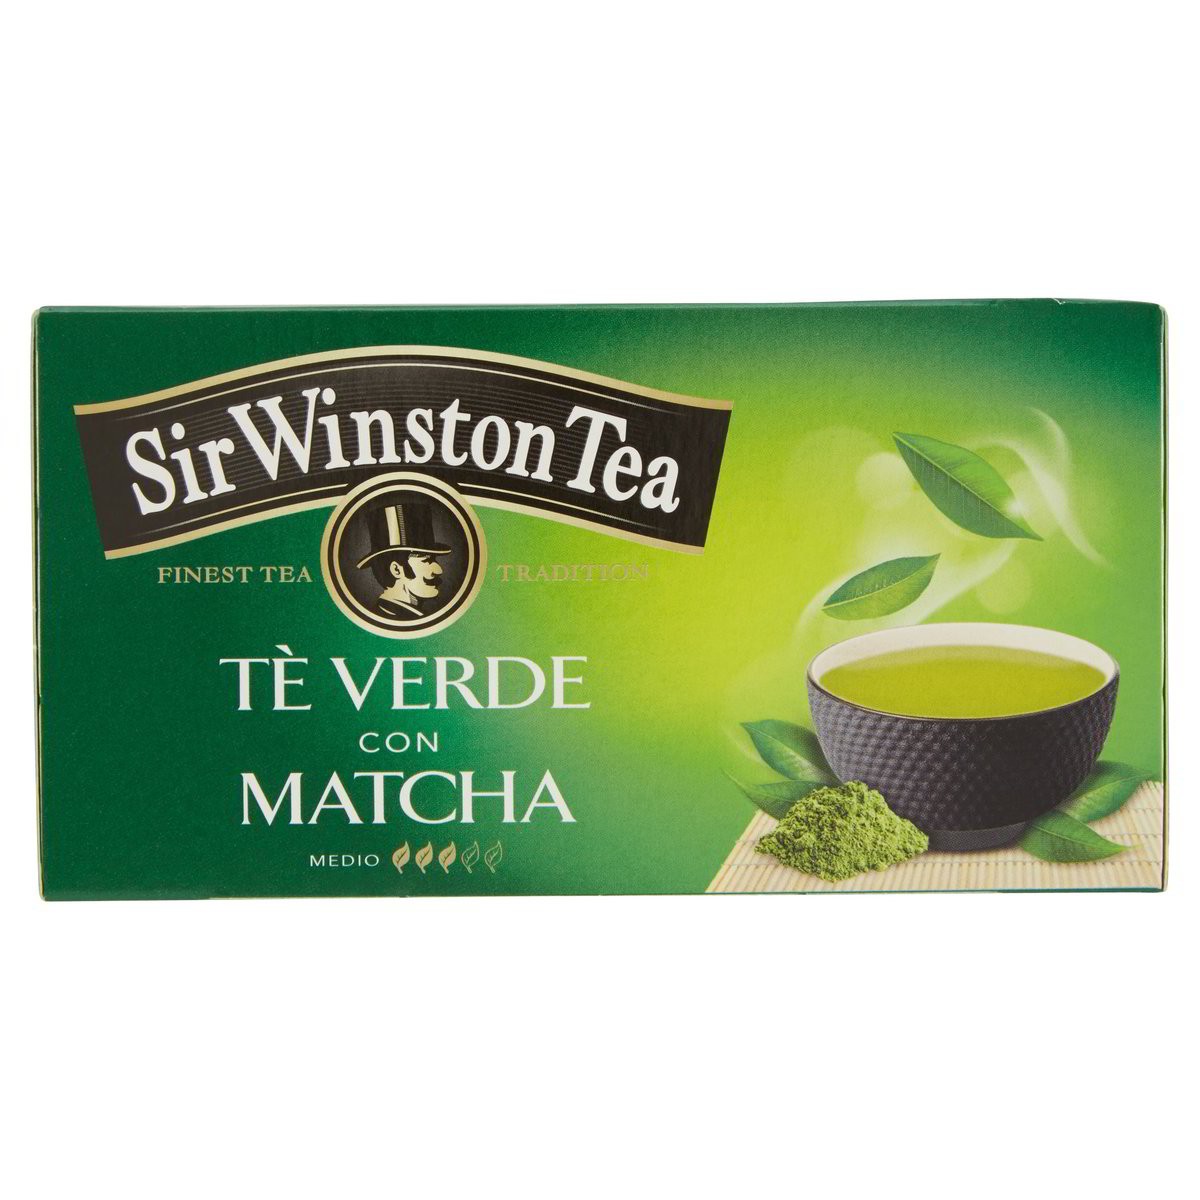 Sir Winston Tea Tè Verde con matcha